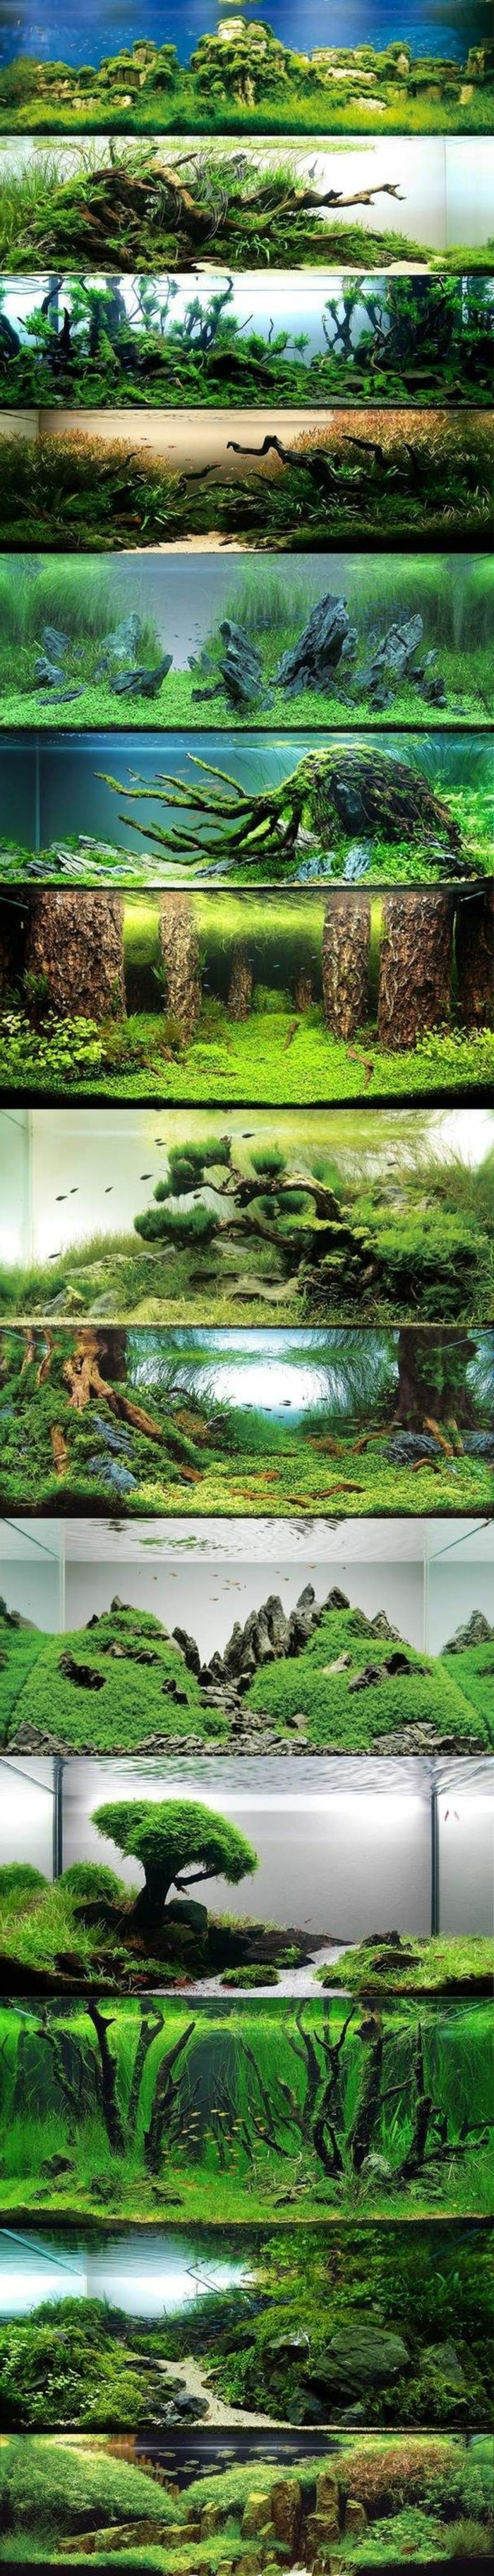 аквариум-дизайн-добрите идеи--фотоколаж-света-с-водни водорасли